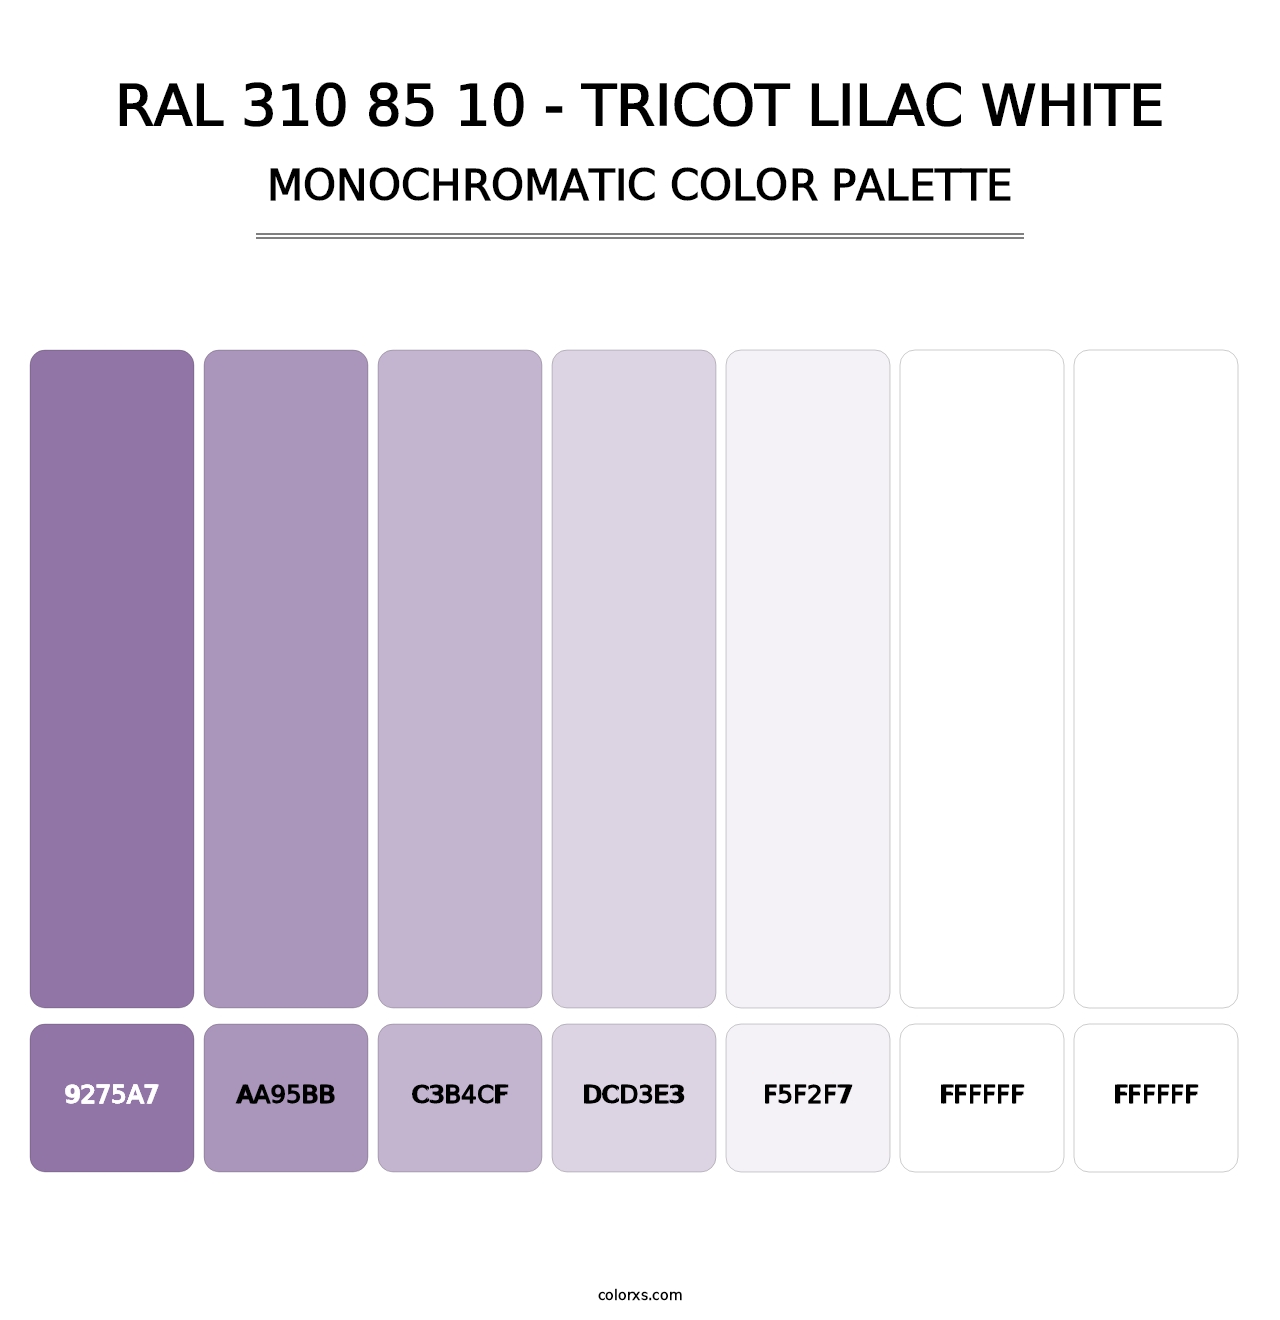 RAL 310 85 10 - Tricot Lilac White - Monochromatic Color Palette